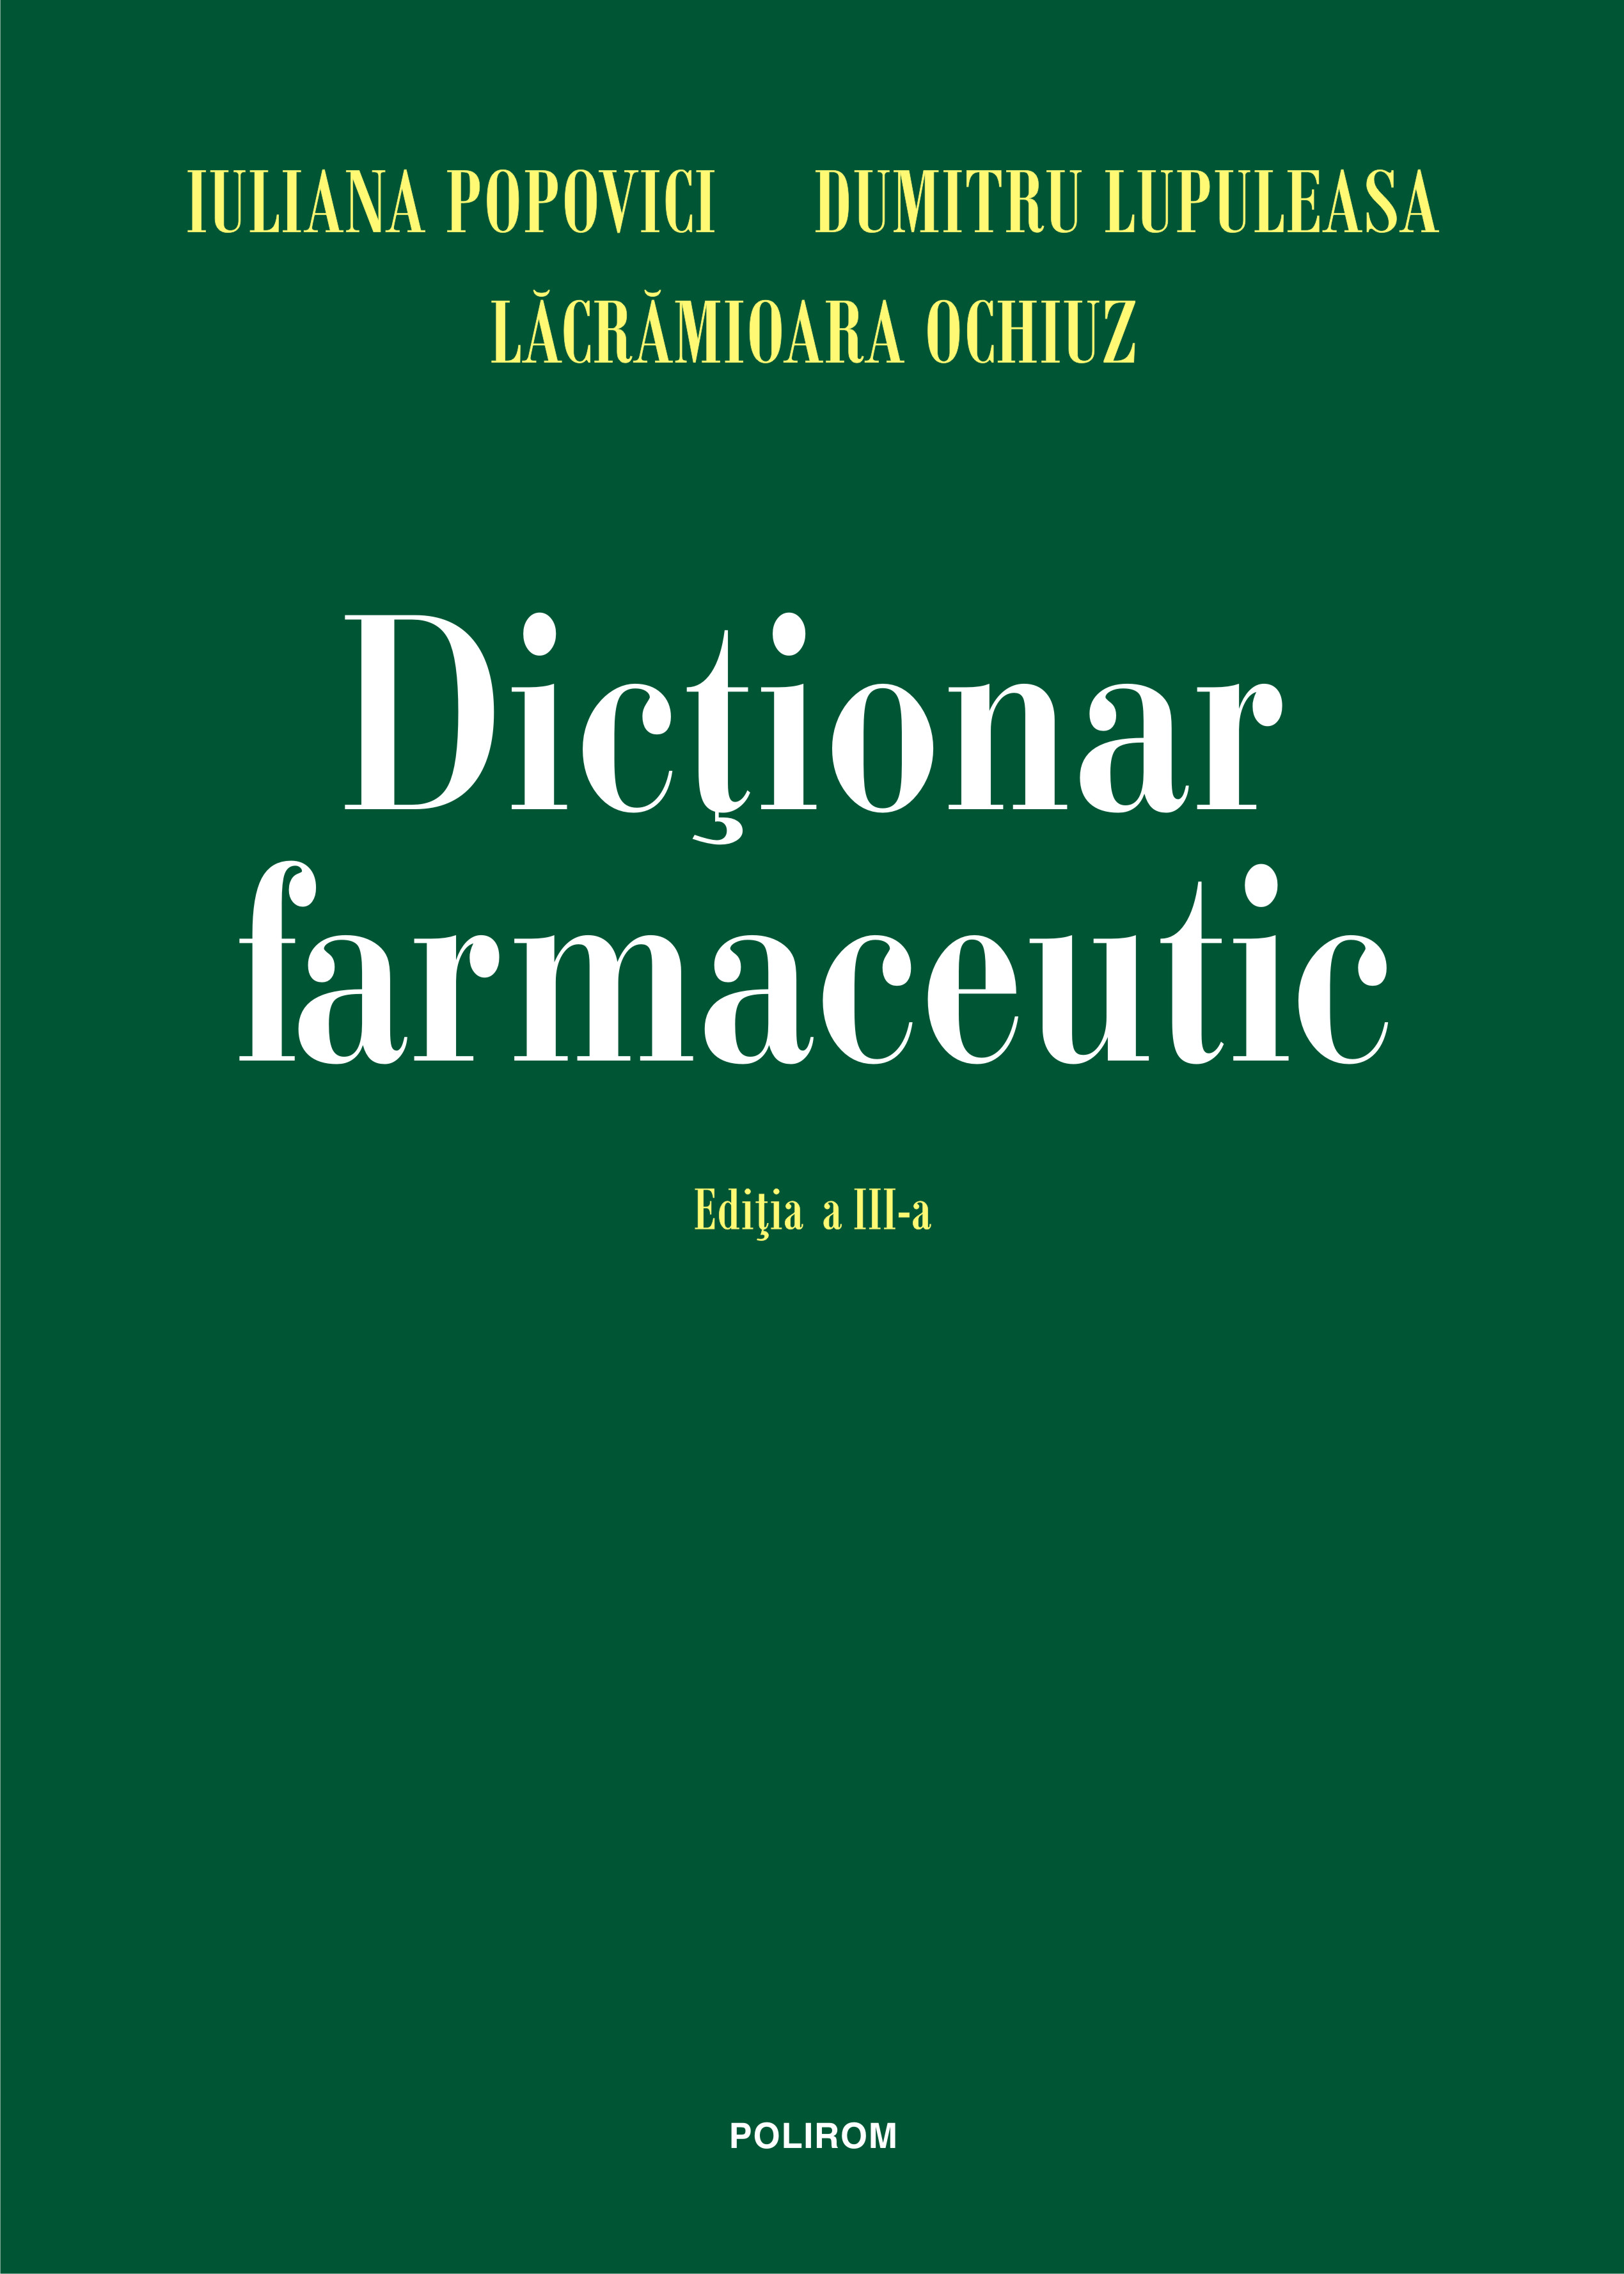 eBook Dictionar farmaceutic - Lacramioara Ochiuz